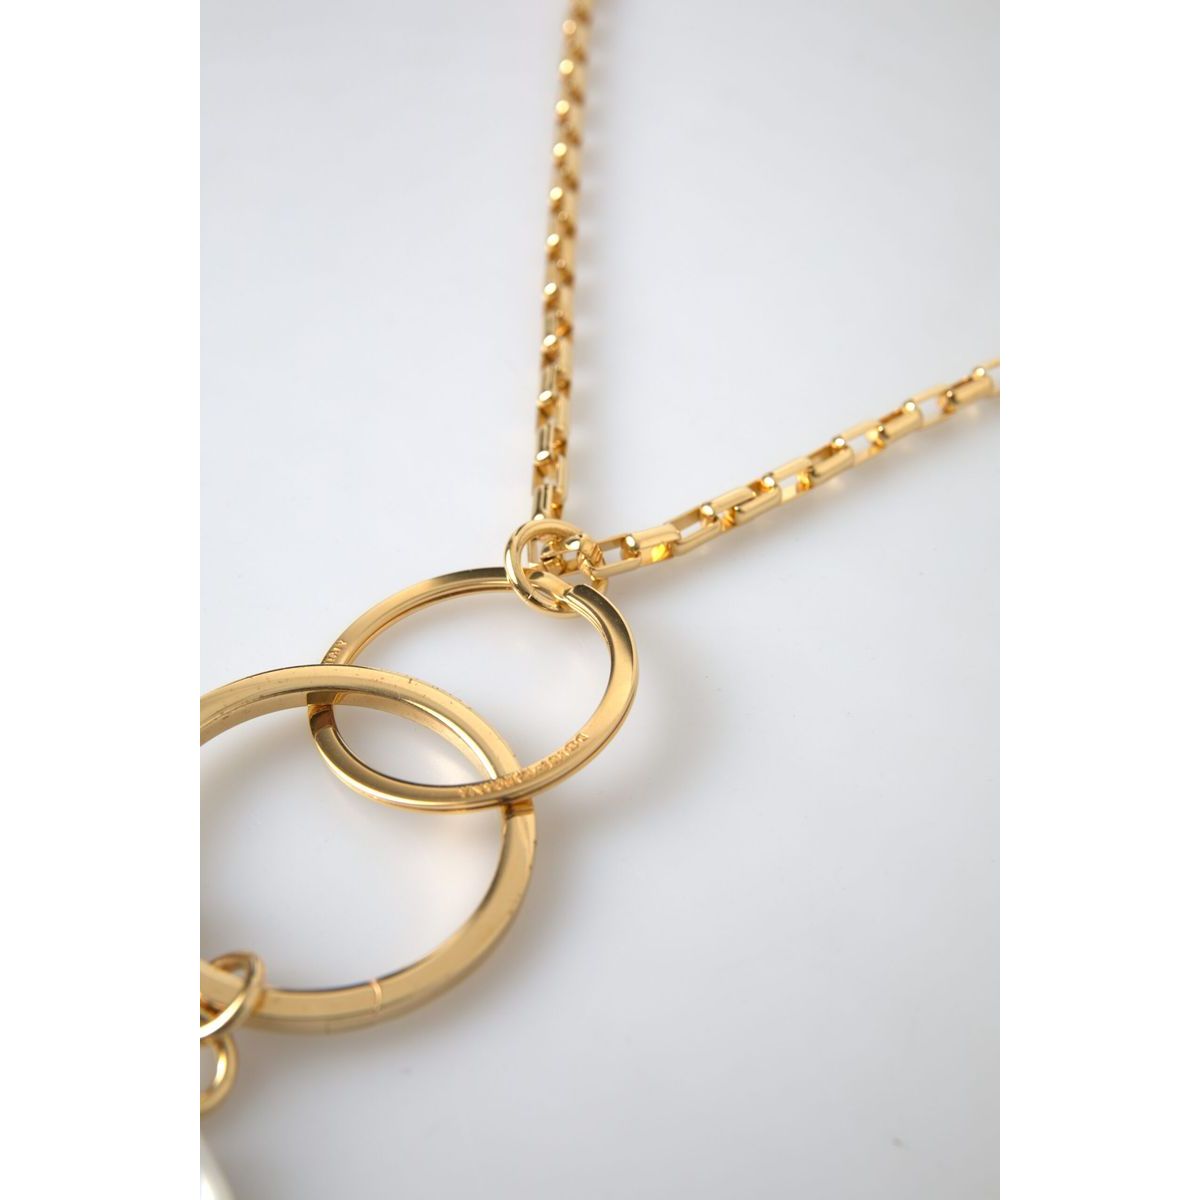 Dolce & Gabbana Chic Gold Charm Chain Necklace gold-tone-brass-chain-link-dg-logo-pendant-necklace 465A1292-scaled-99beb484-4ee_0a267daa-c2da-4f24-abb3-4d0e45048c3e.jpg